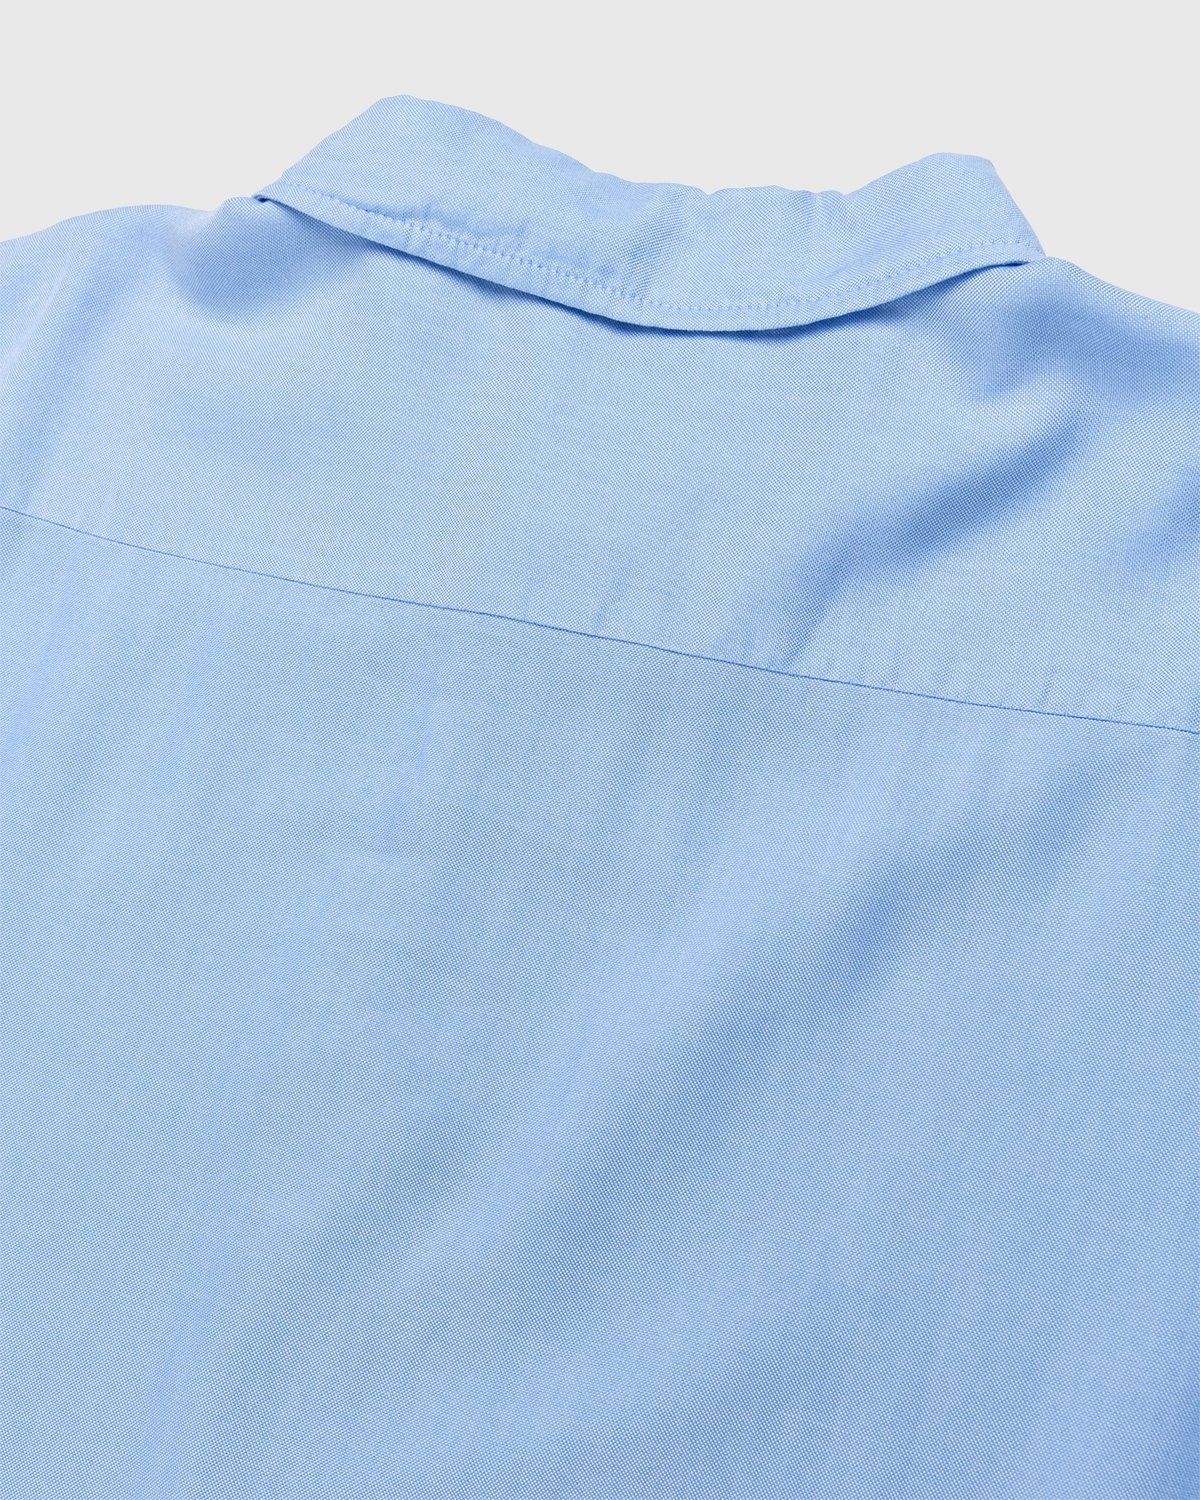 Acne Studios – Classic Monogram Button-Up Shirt Light Blue - Shirts - Blue - Image 3